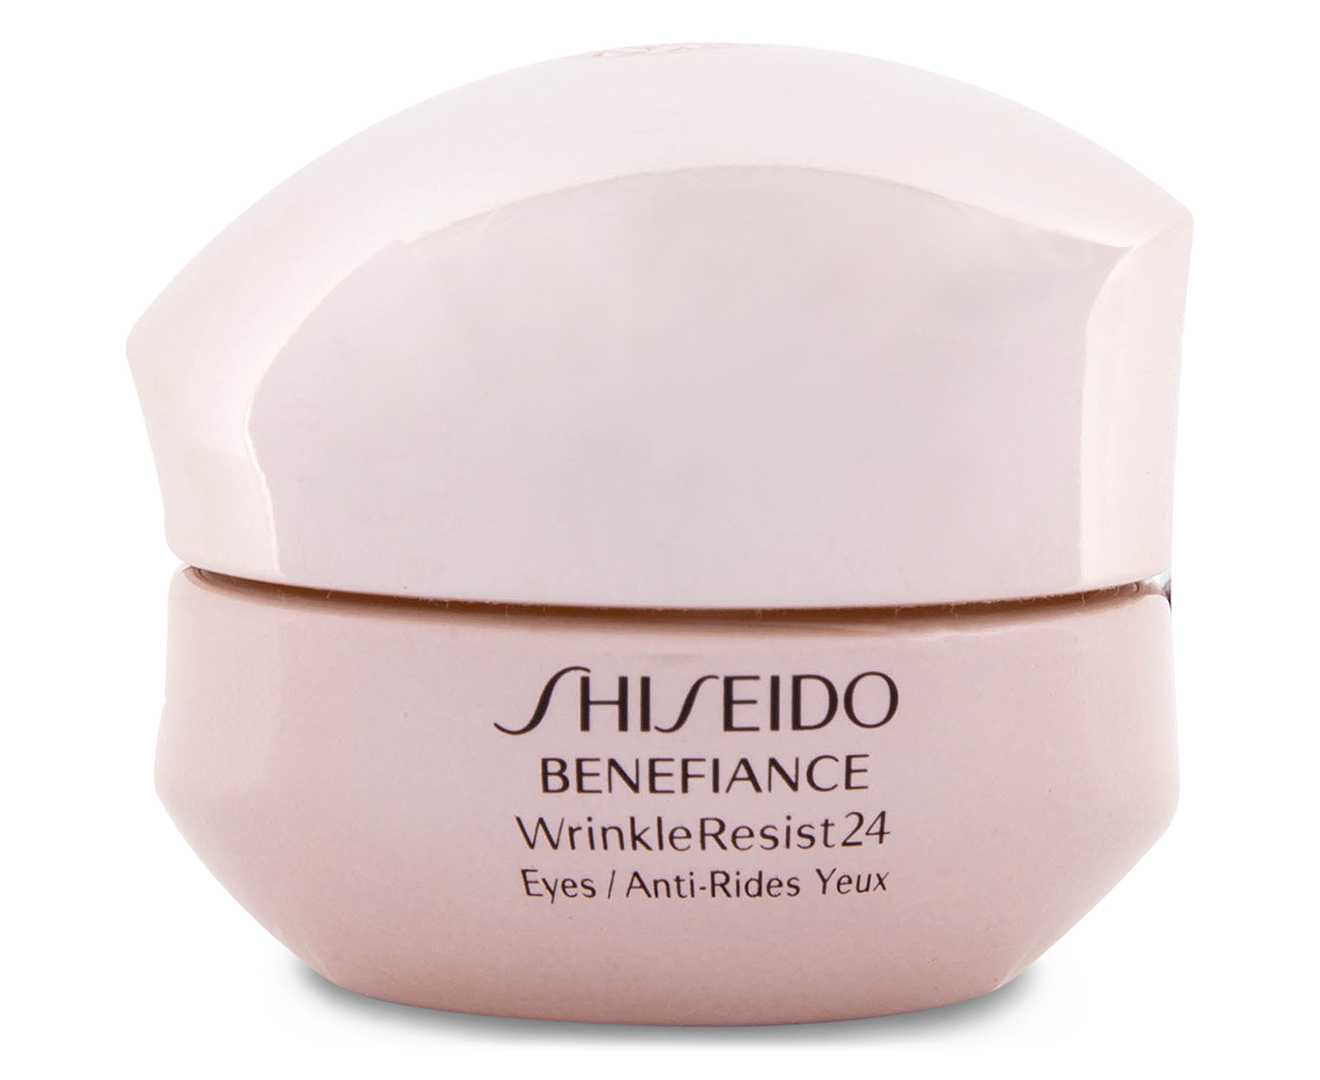 Shiseido крем для глаз Benefiance. Крем wrinkleresist24 от Shiseido. Shiseido Benefiance wrinkleresist24 Intensive Eye Contour Cream Creme Internet Anti-Rides yeux 2018. Shiseido Anti Wrinkle Cream.